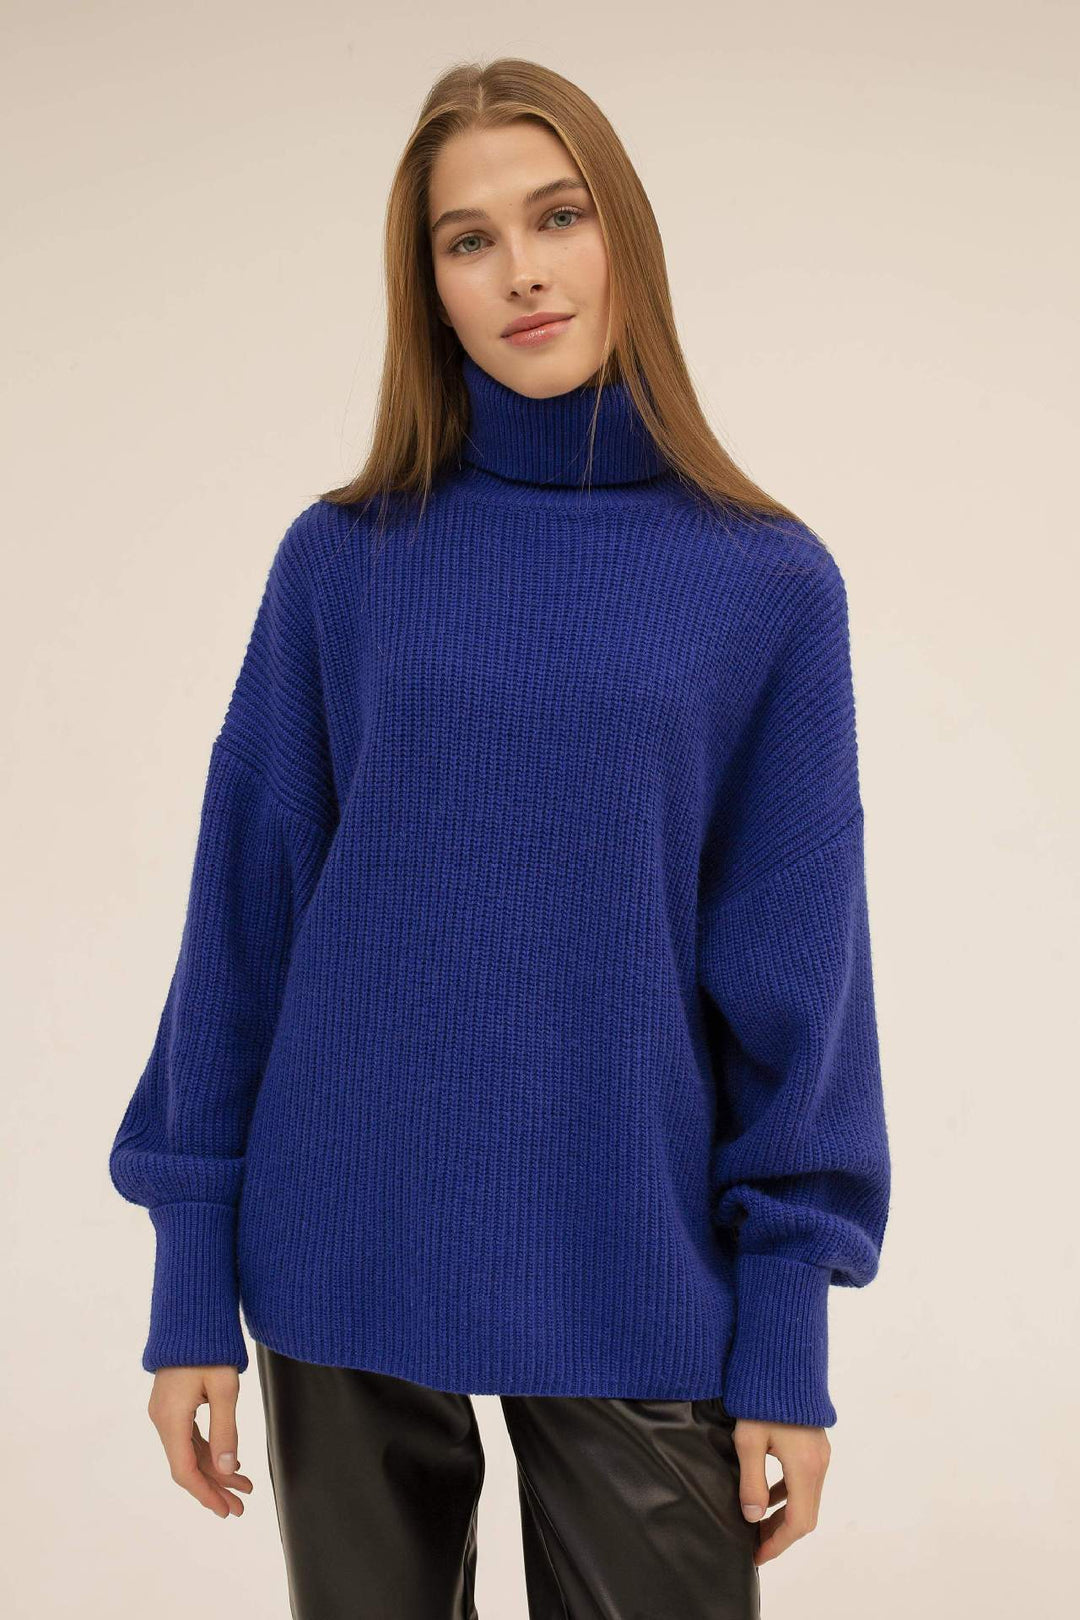 Autumn Winter Popular High Collar Loose Knitwear Sweater